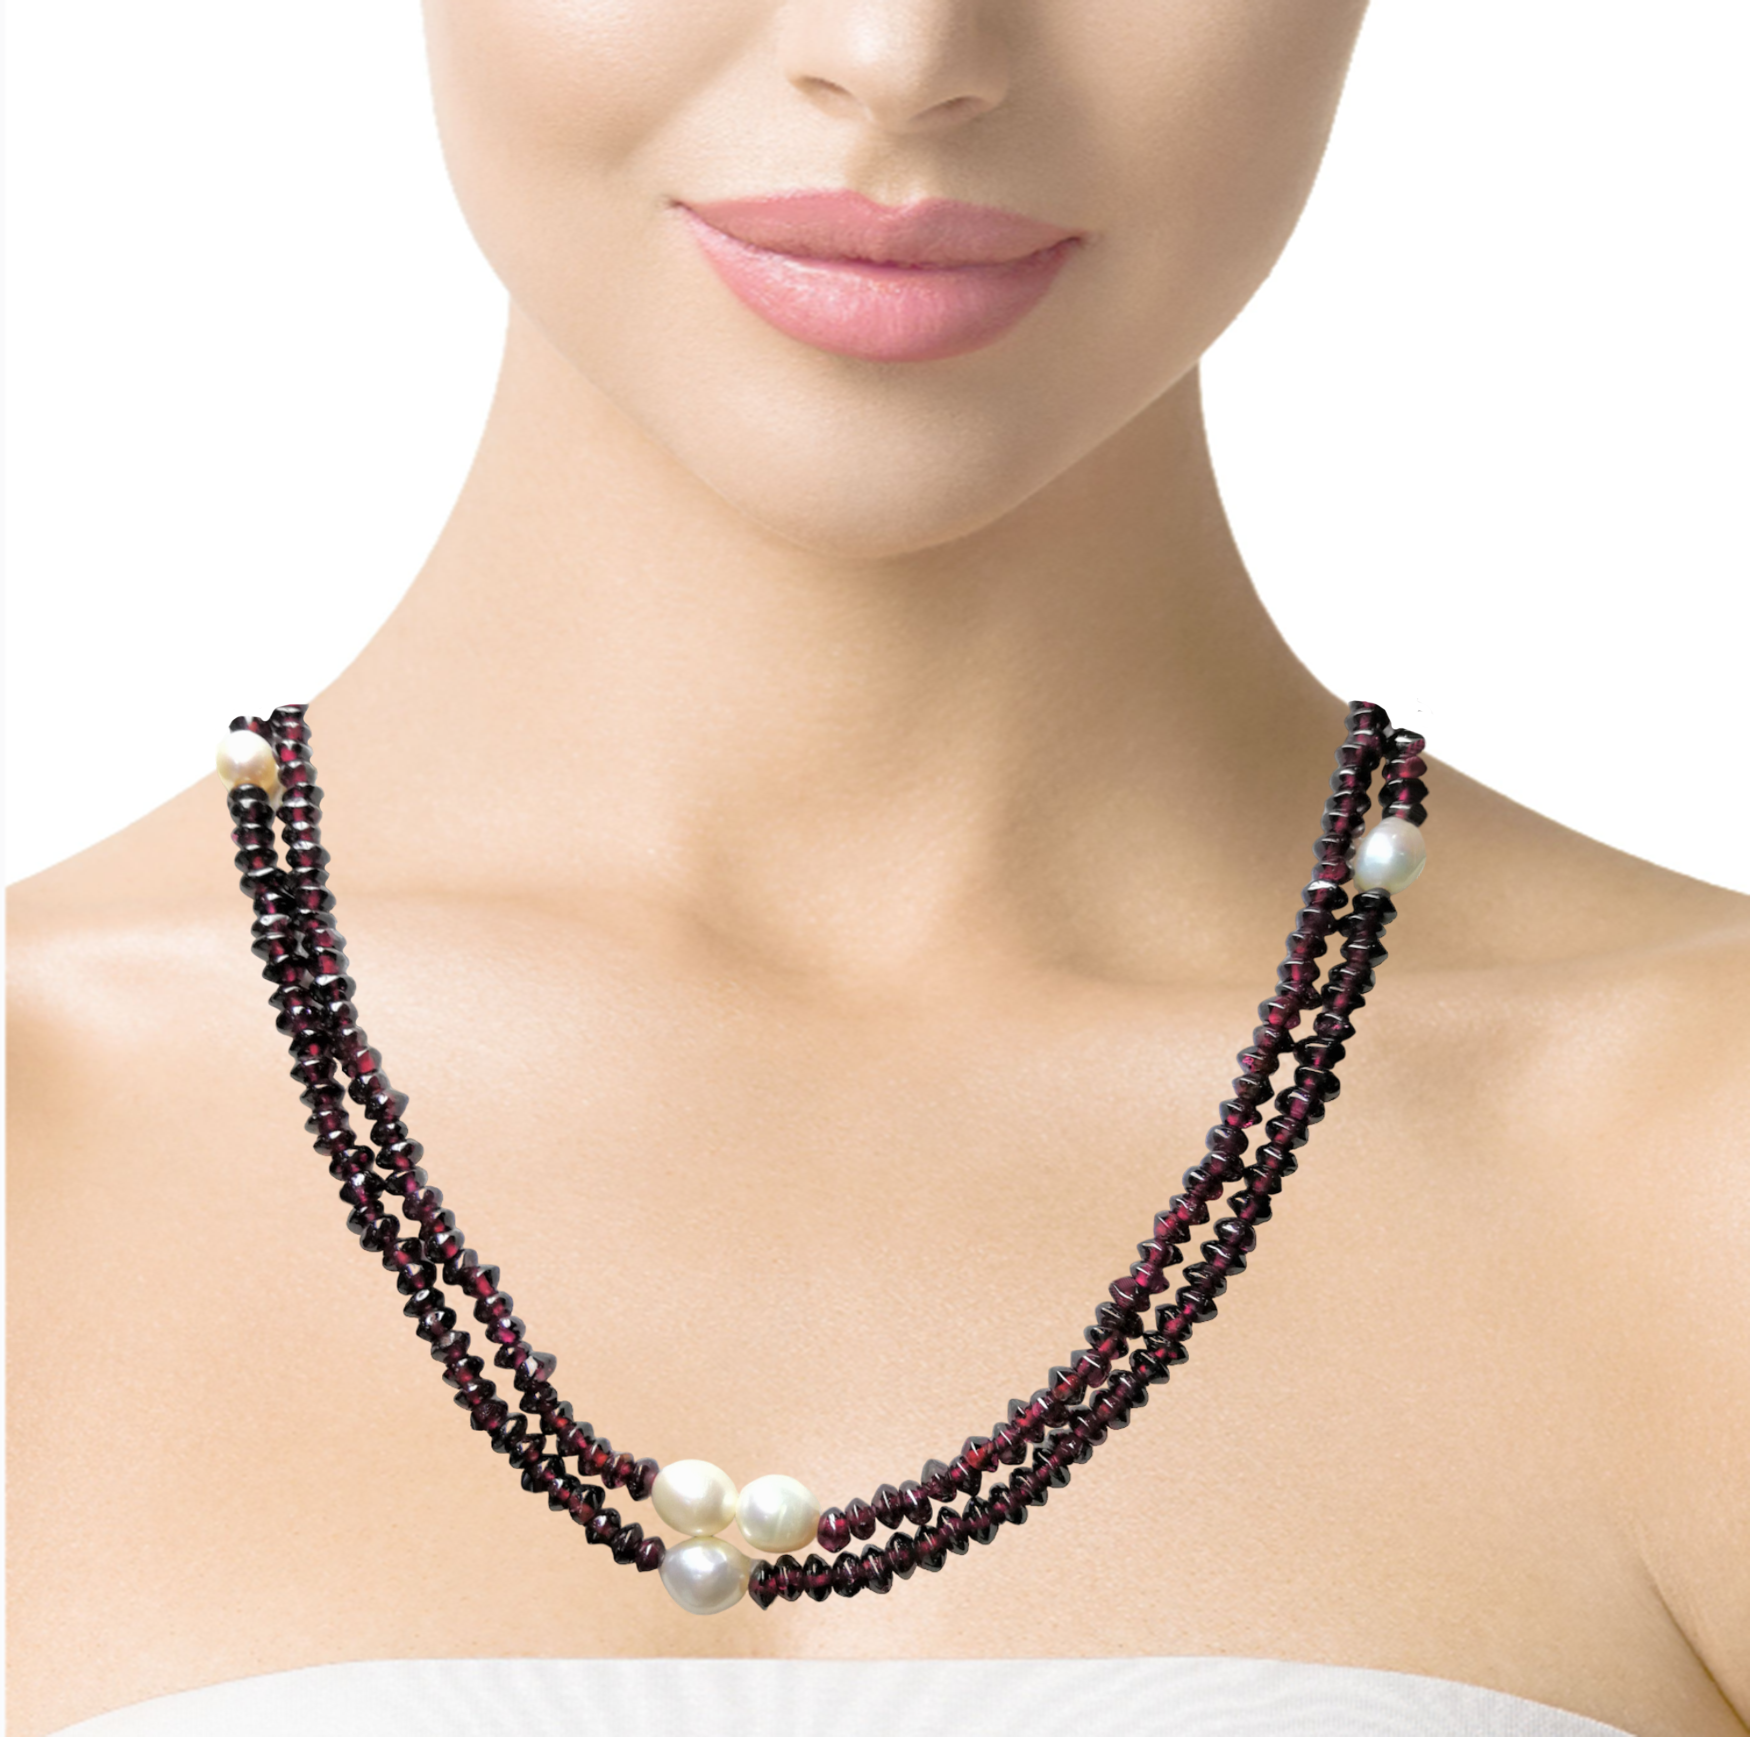 Natural Handmade Necklace 16"-18" Garnet Pearls Layered Gem Beads Jewelry